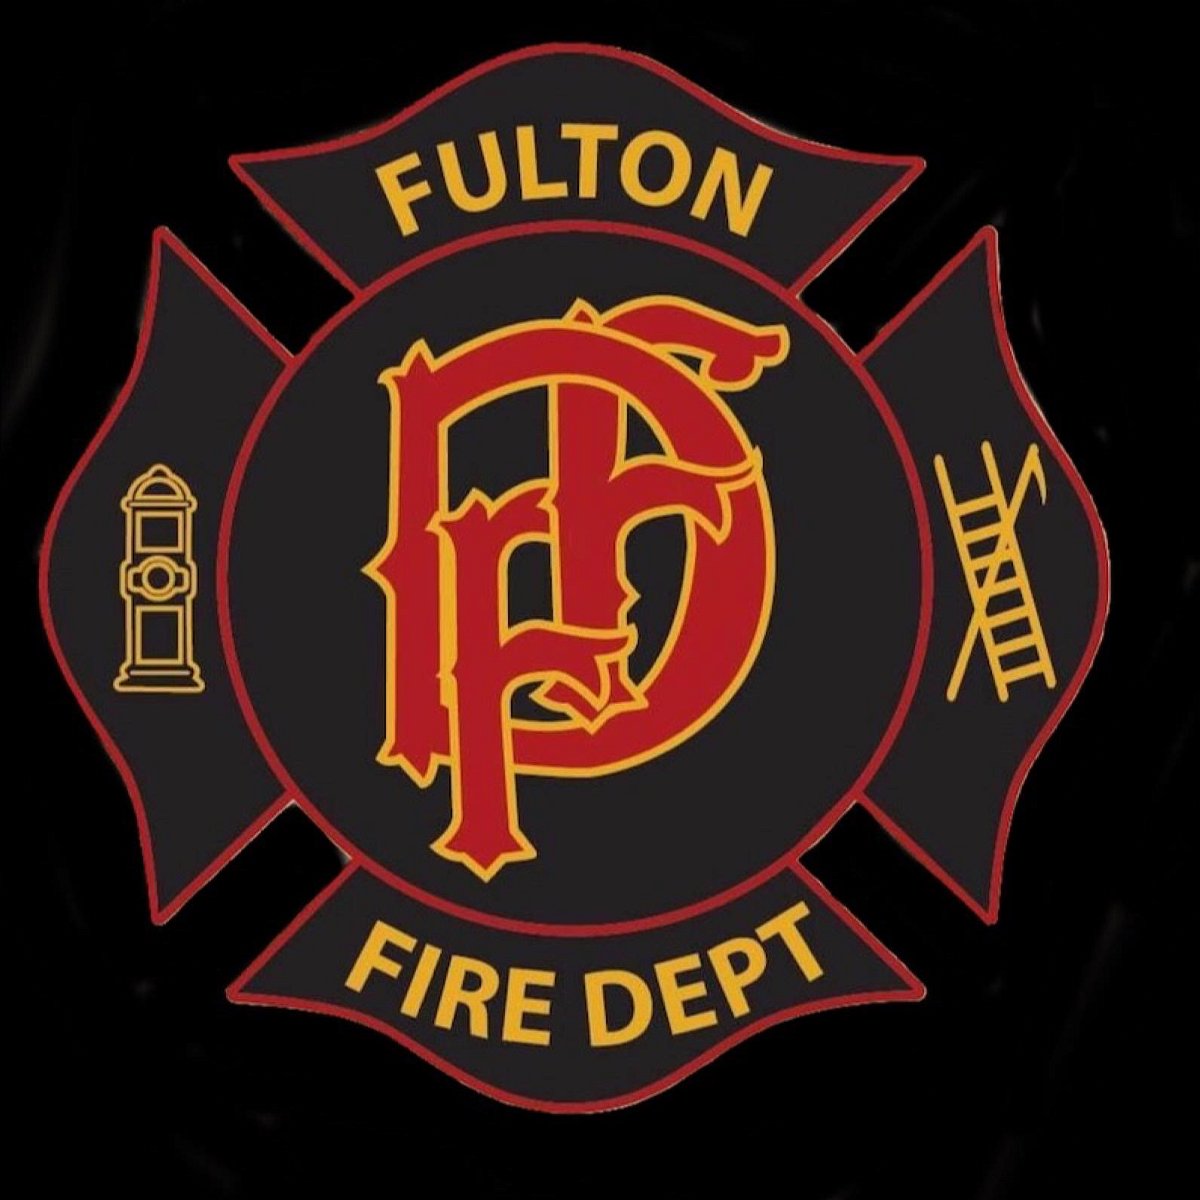 Fulton Fire Department logo